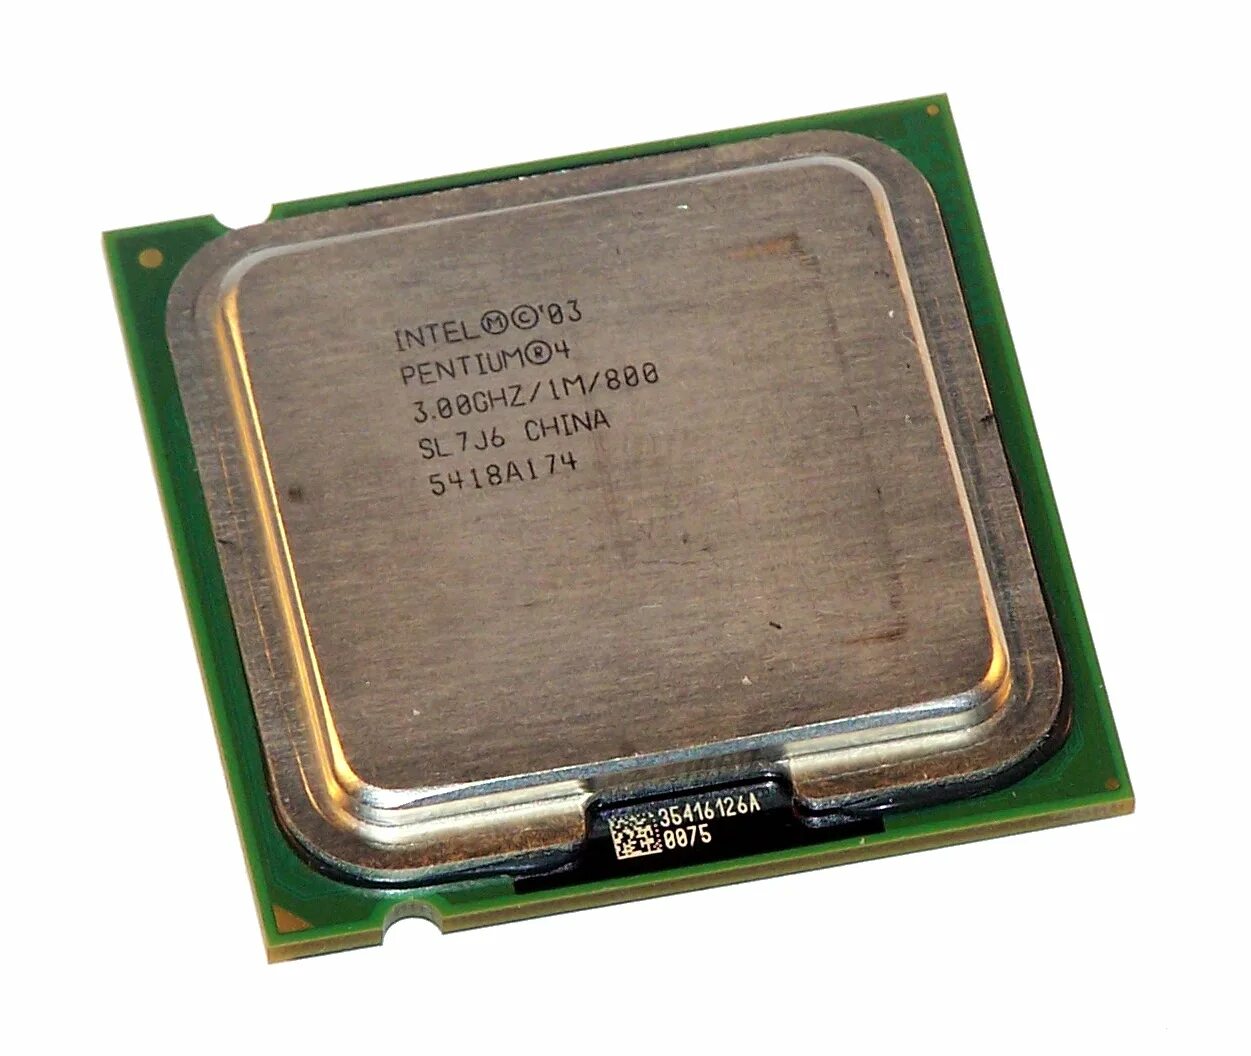 4 3.3 ггц. Процессор Intel 04 Pentium 4. Intel 04 Pentium 4 3.00GHZ/1m/800/04a. Процессор Intel Pentium 4 3400mhz Prescott. Intel Pentium 4 2.0 GHZ.